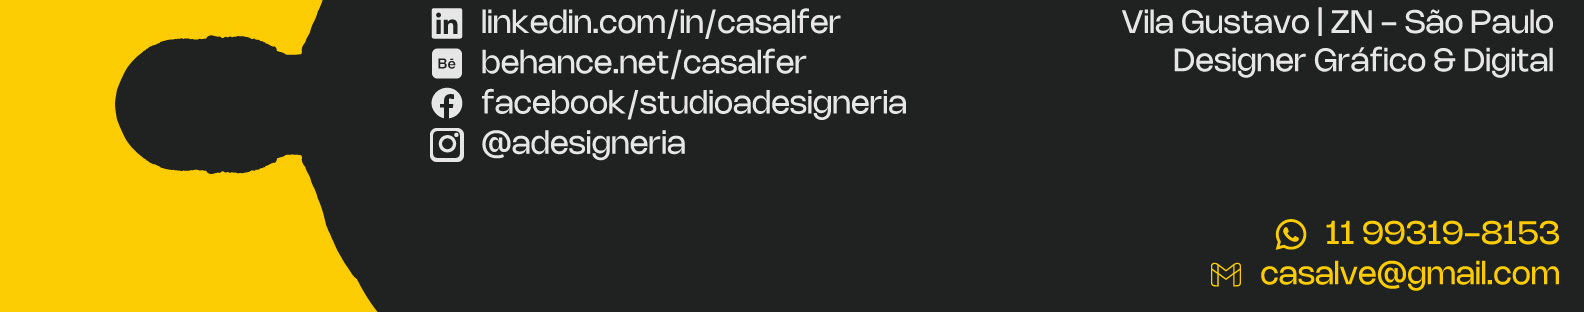 Banner de perfil de Cassiano Ferreira